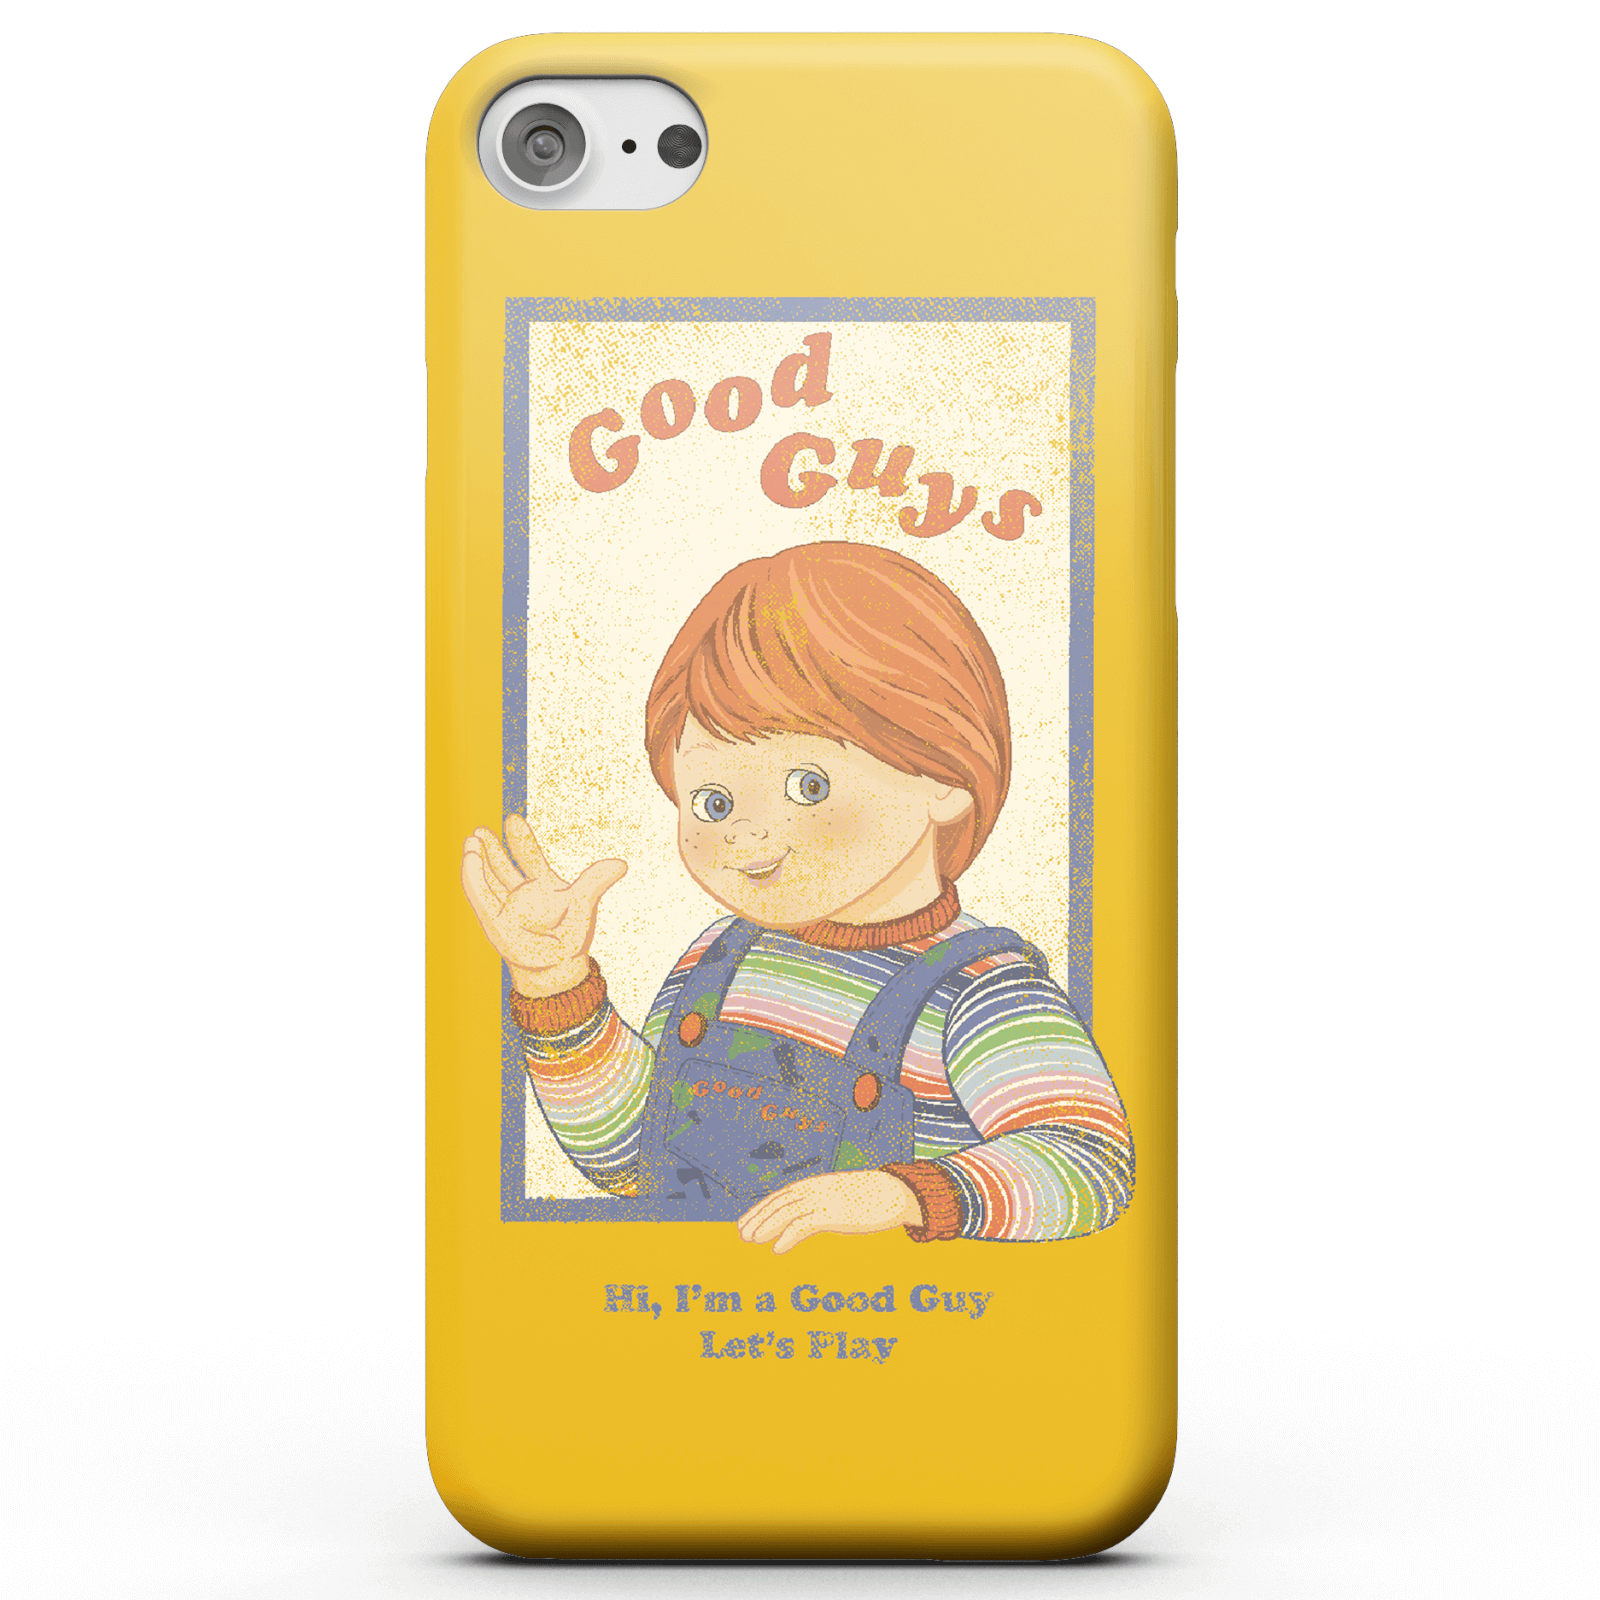 Funda Móvil Chucky Good Guys Retro para iPhone y Android - iPhone 7 Plus - Carcasa rígida - Mate